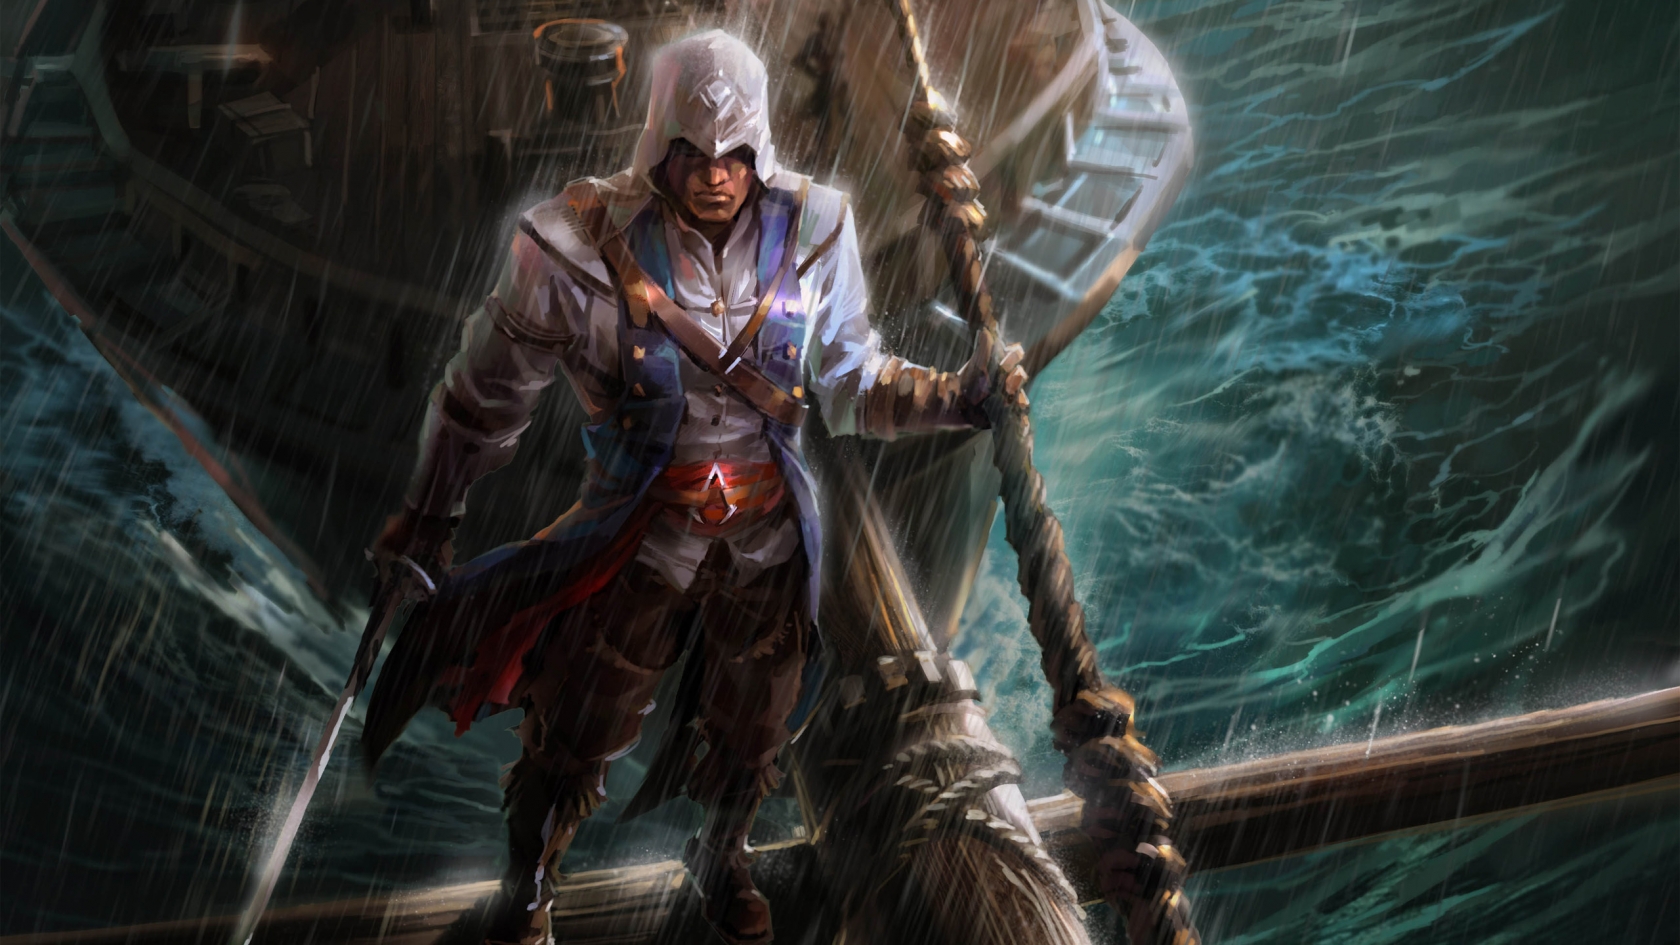 Assassins Creed Fan Art for 1680 x 945 HDTV resolution